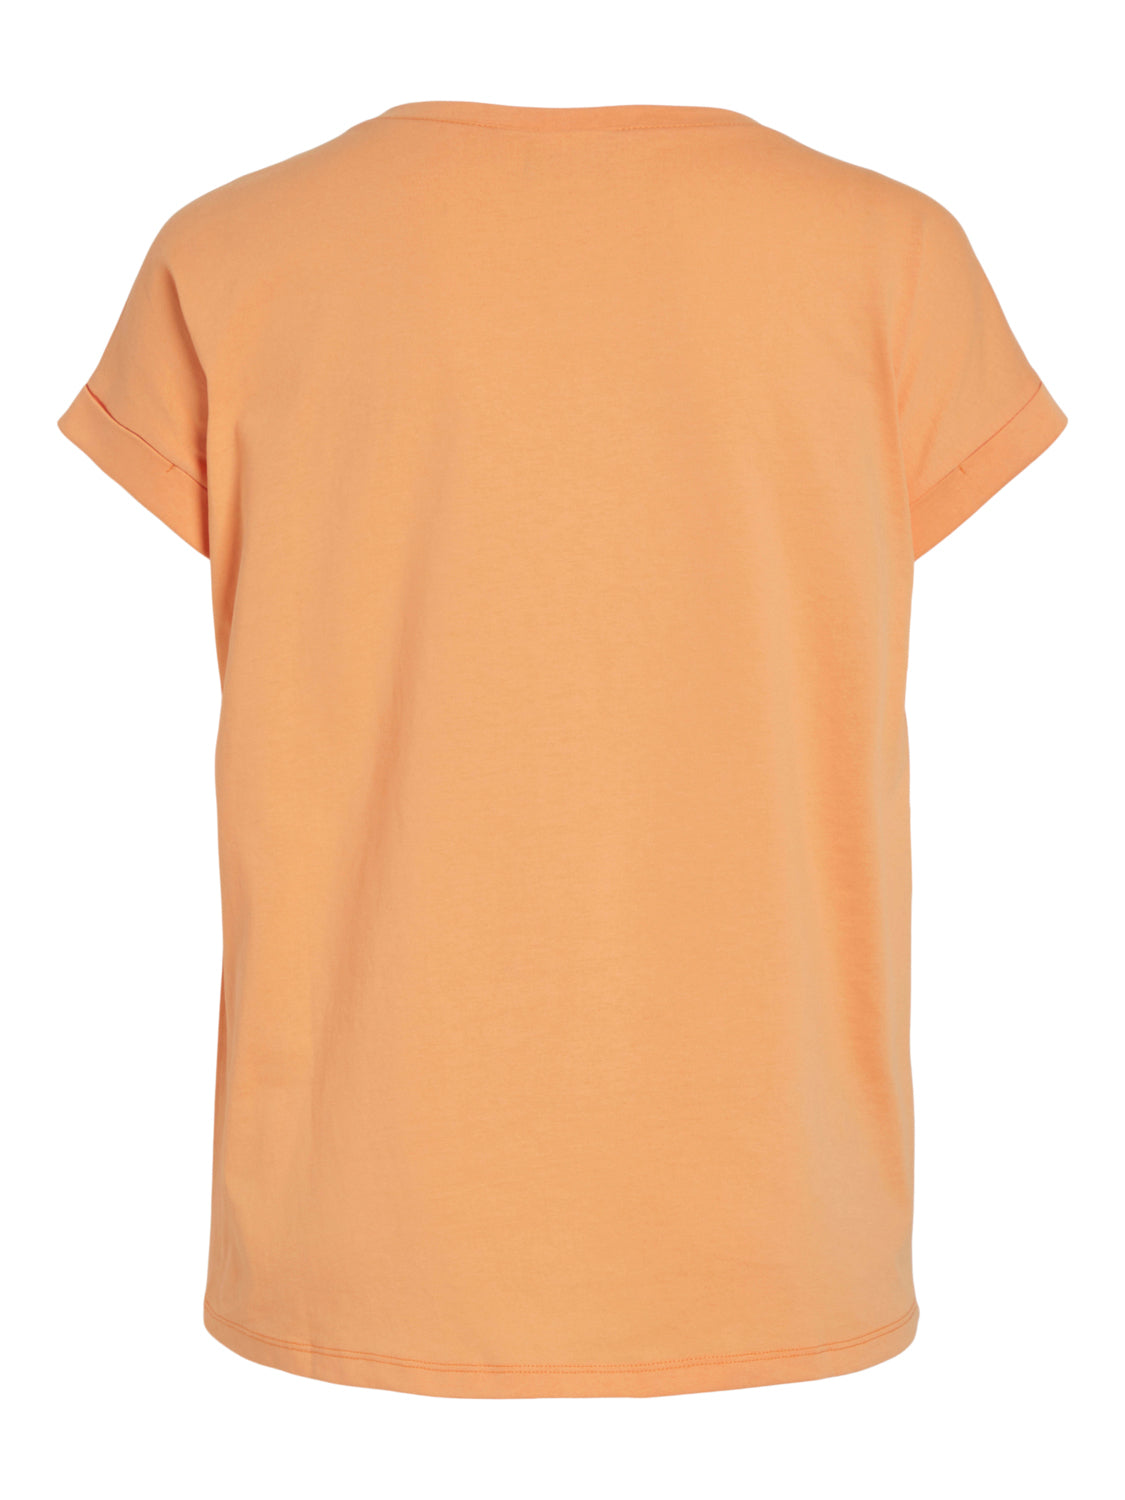 VIDREAMERS T-Shirts & Tops - Apricot Wash